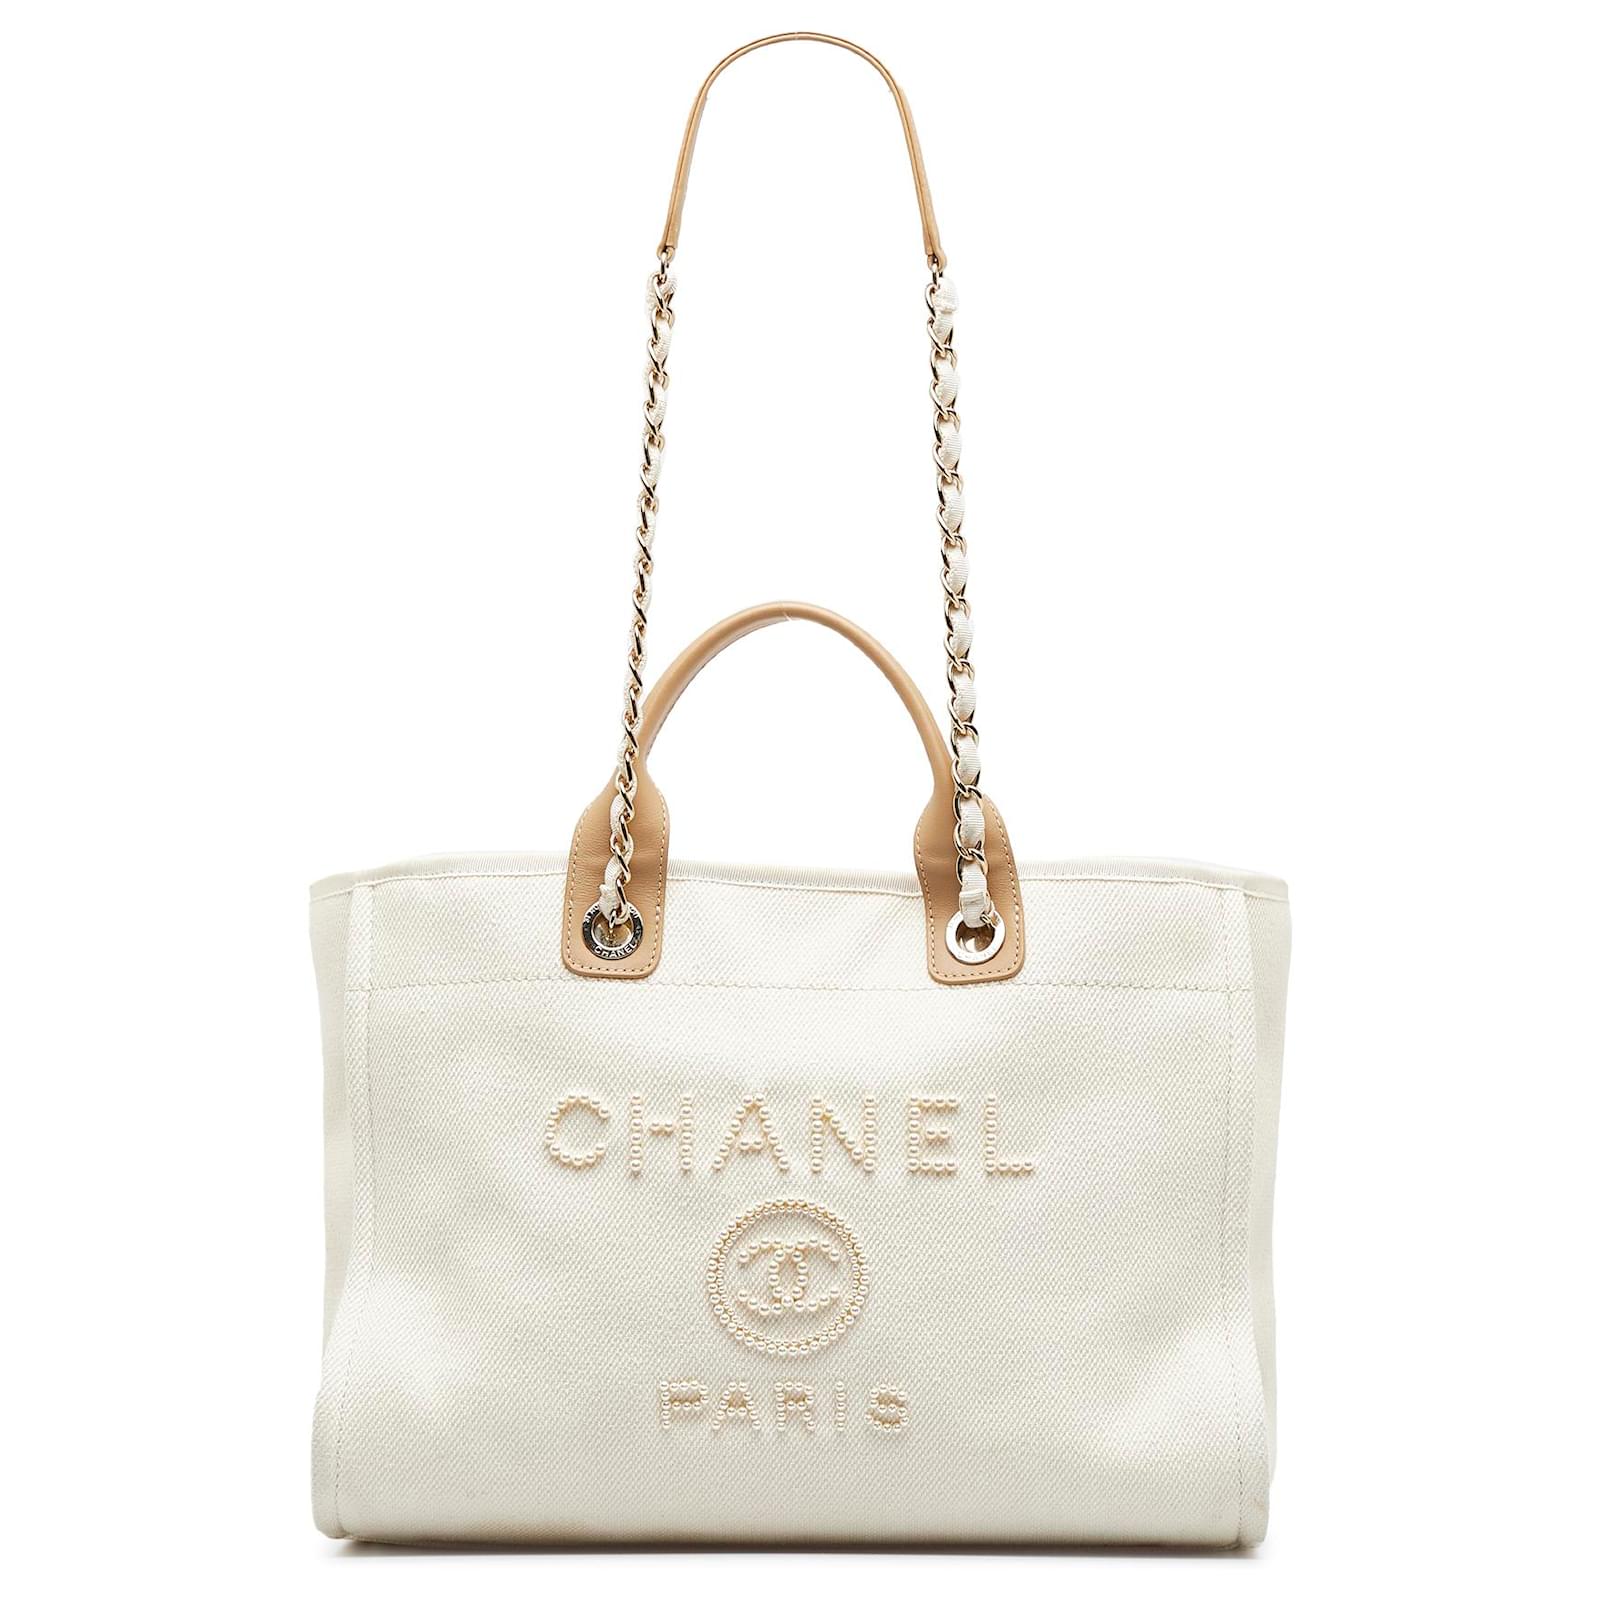 Chanel White Medium Pearls Deauville Shopping Tote Cream Cloth